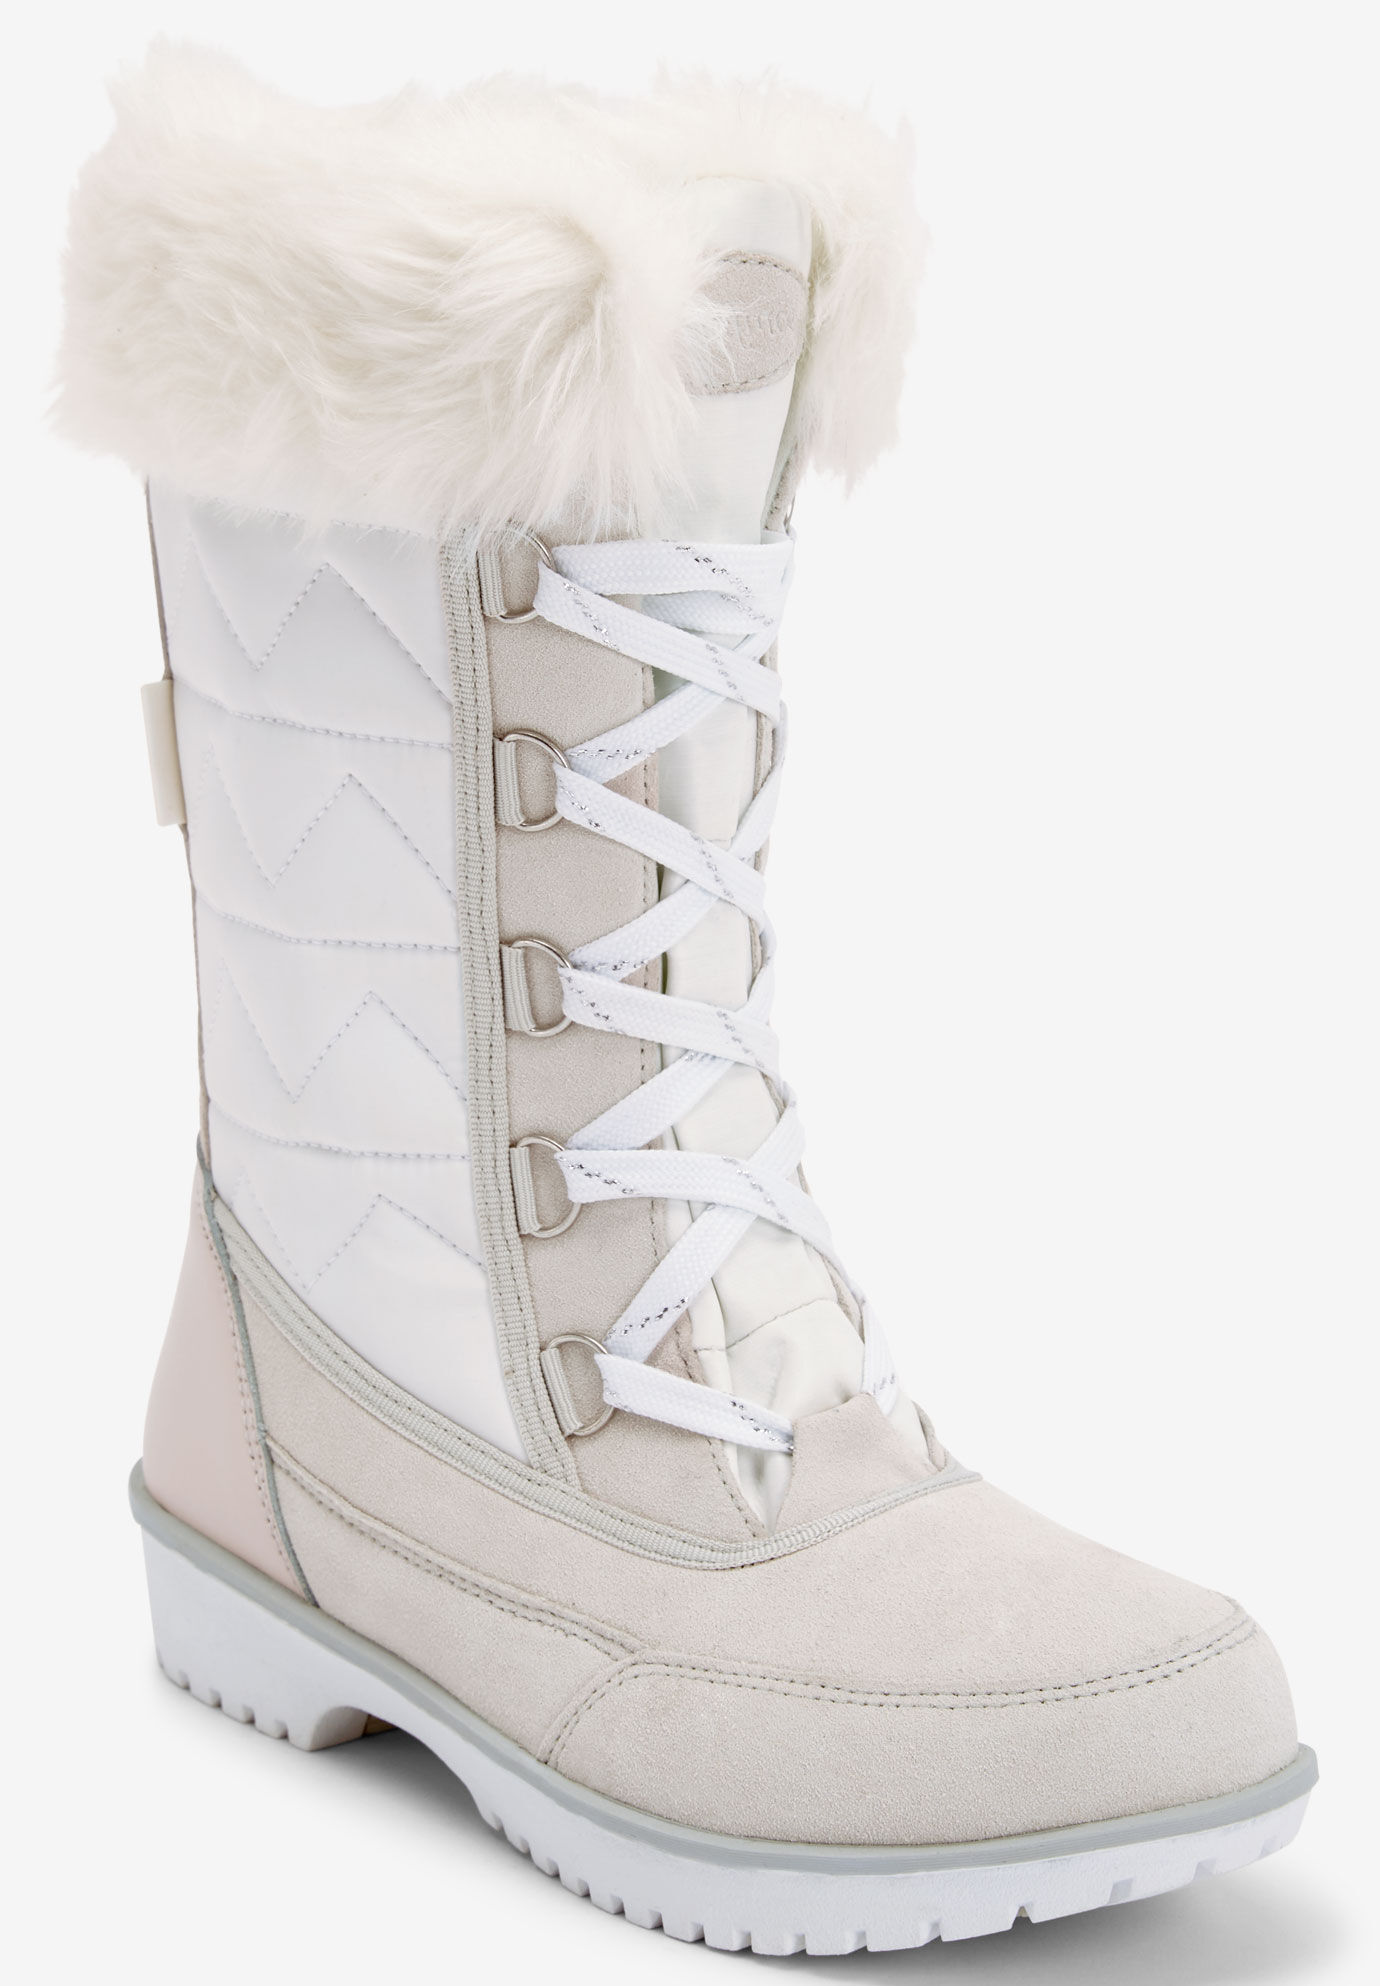 Wide Calf Warm Winter Boots for Women 